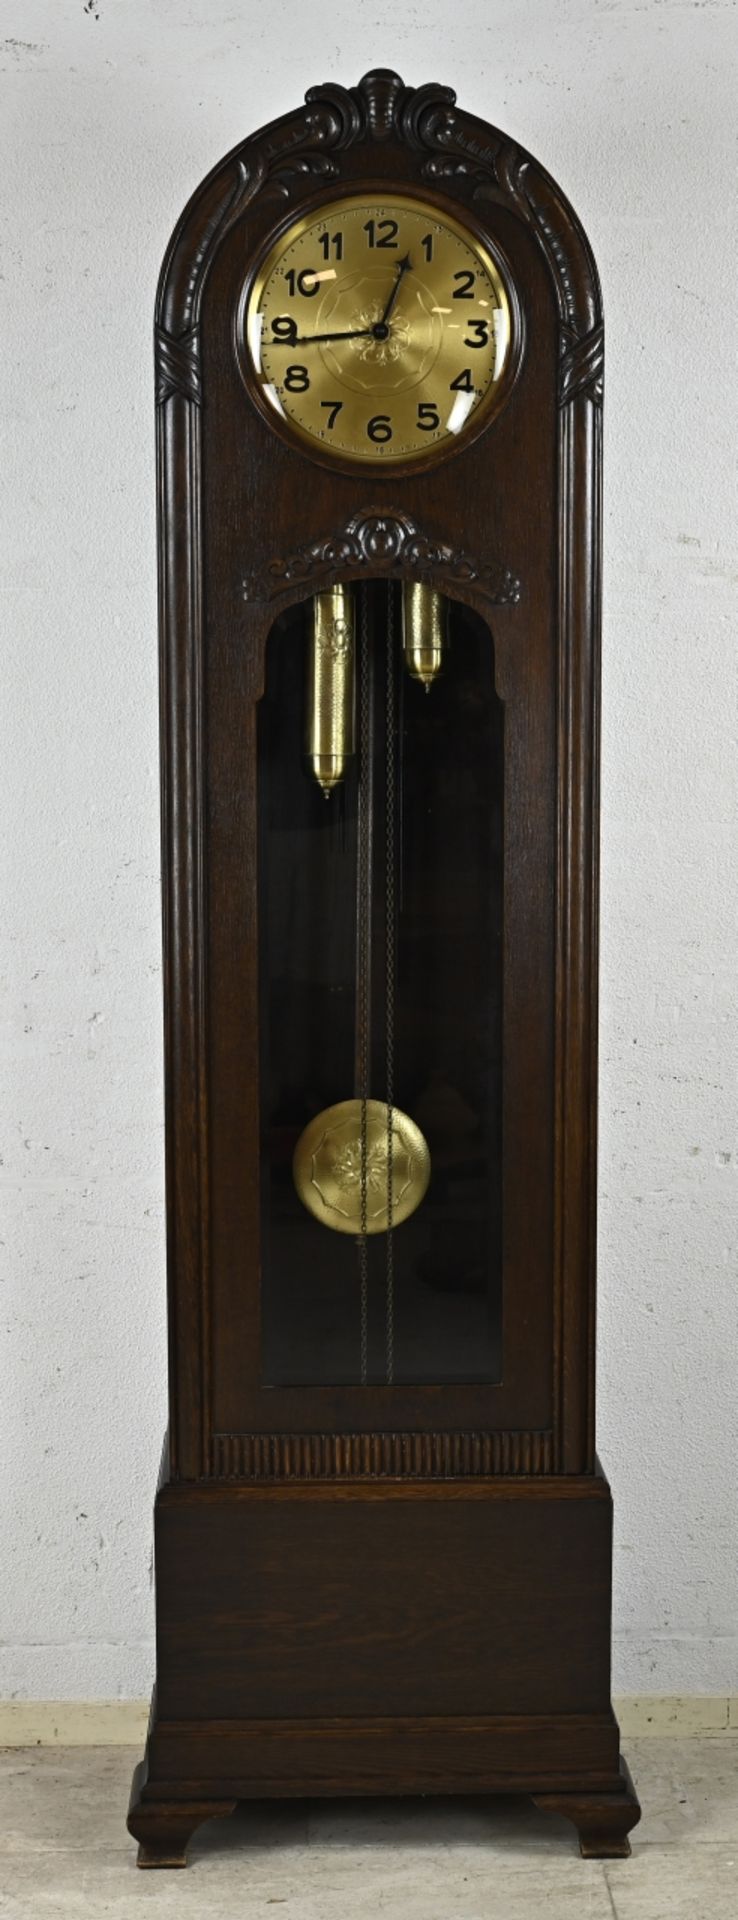 Junghan's grandfather clock